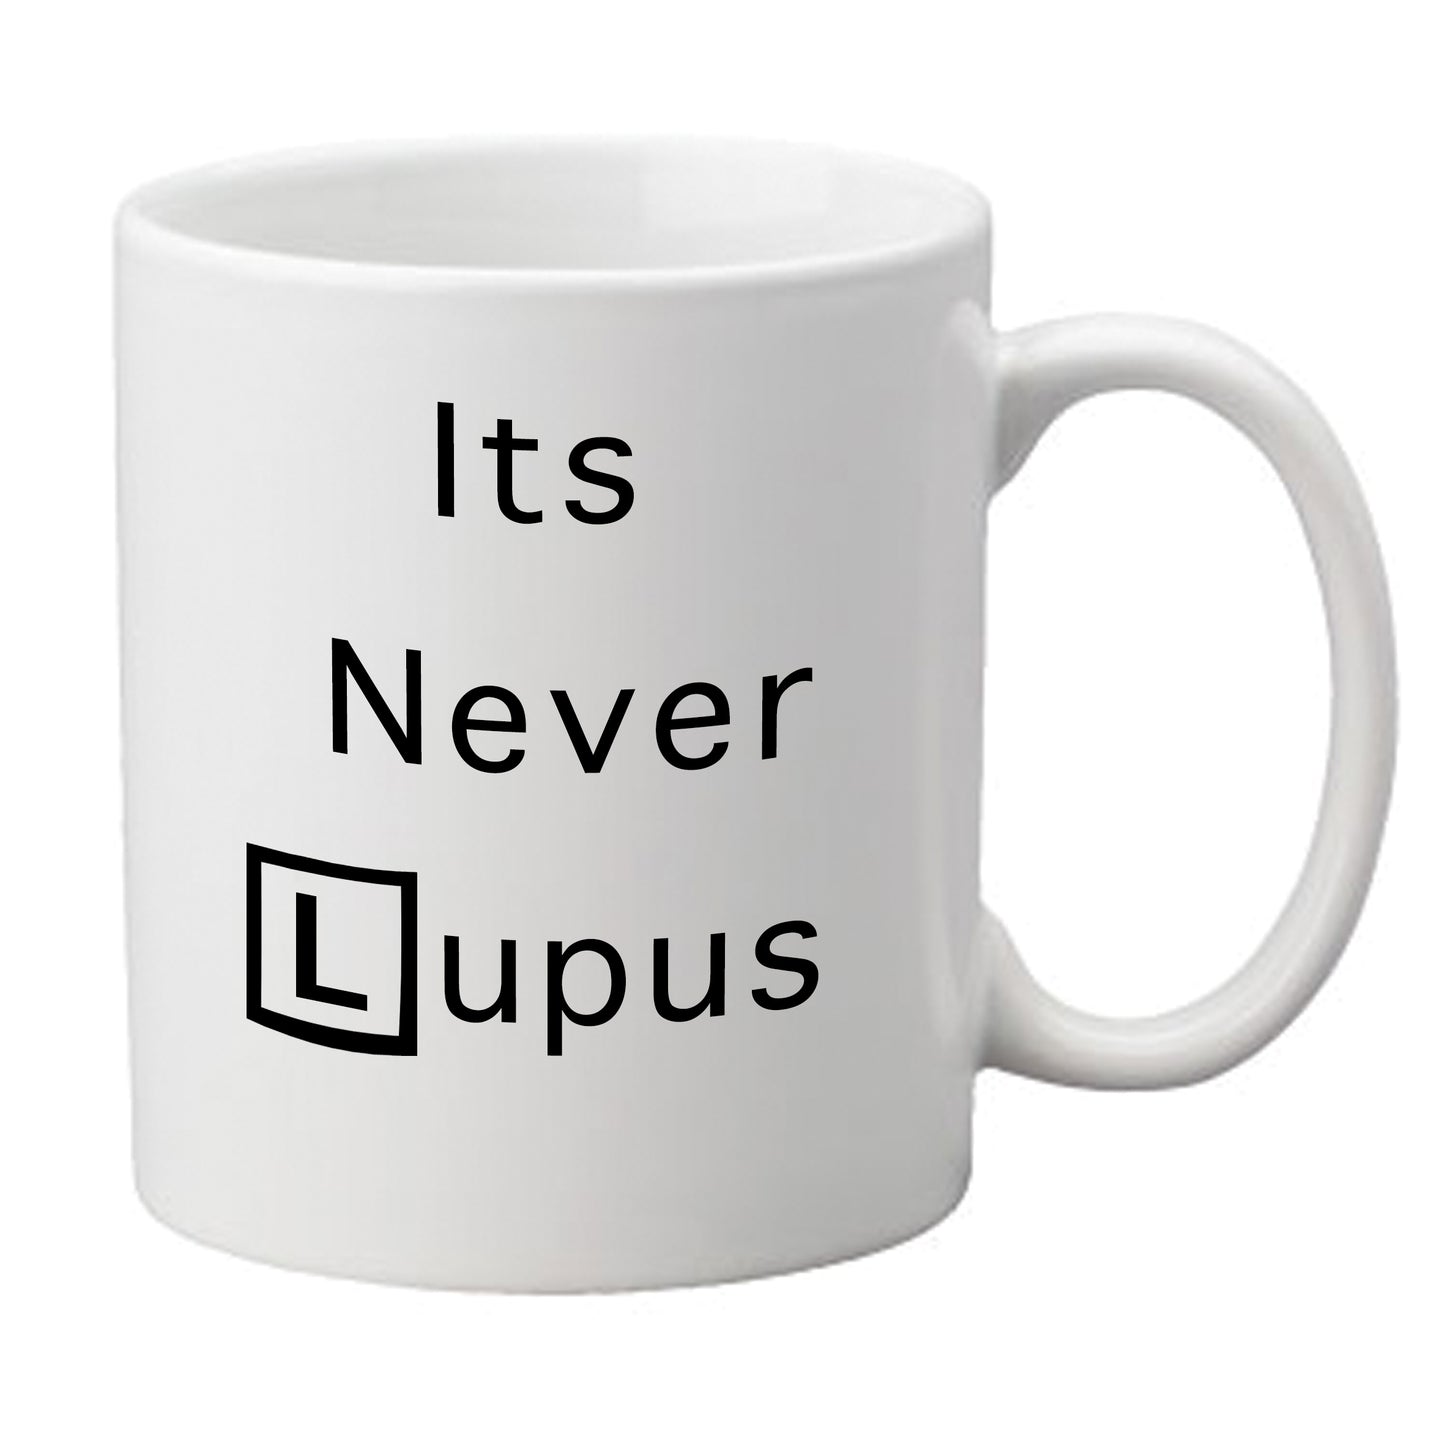 'It's Never Lupus' Mug